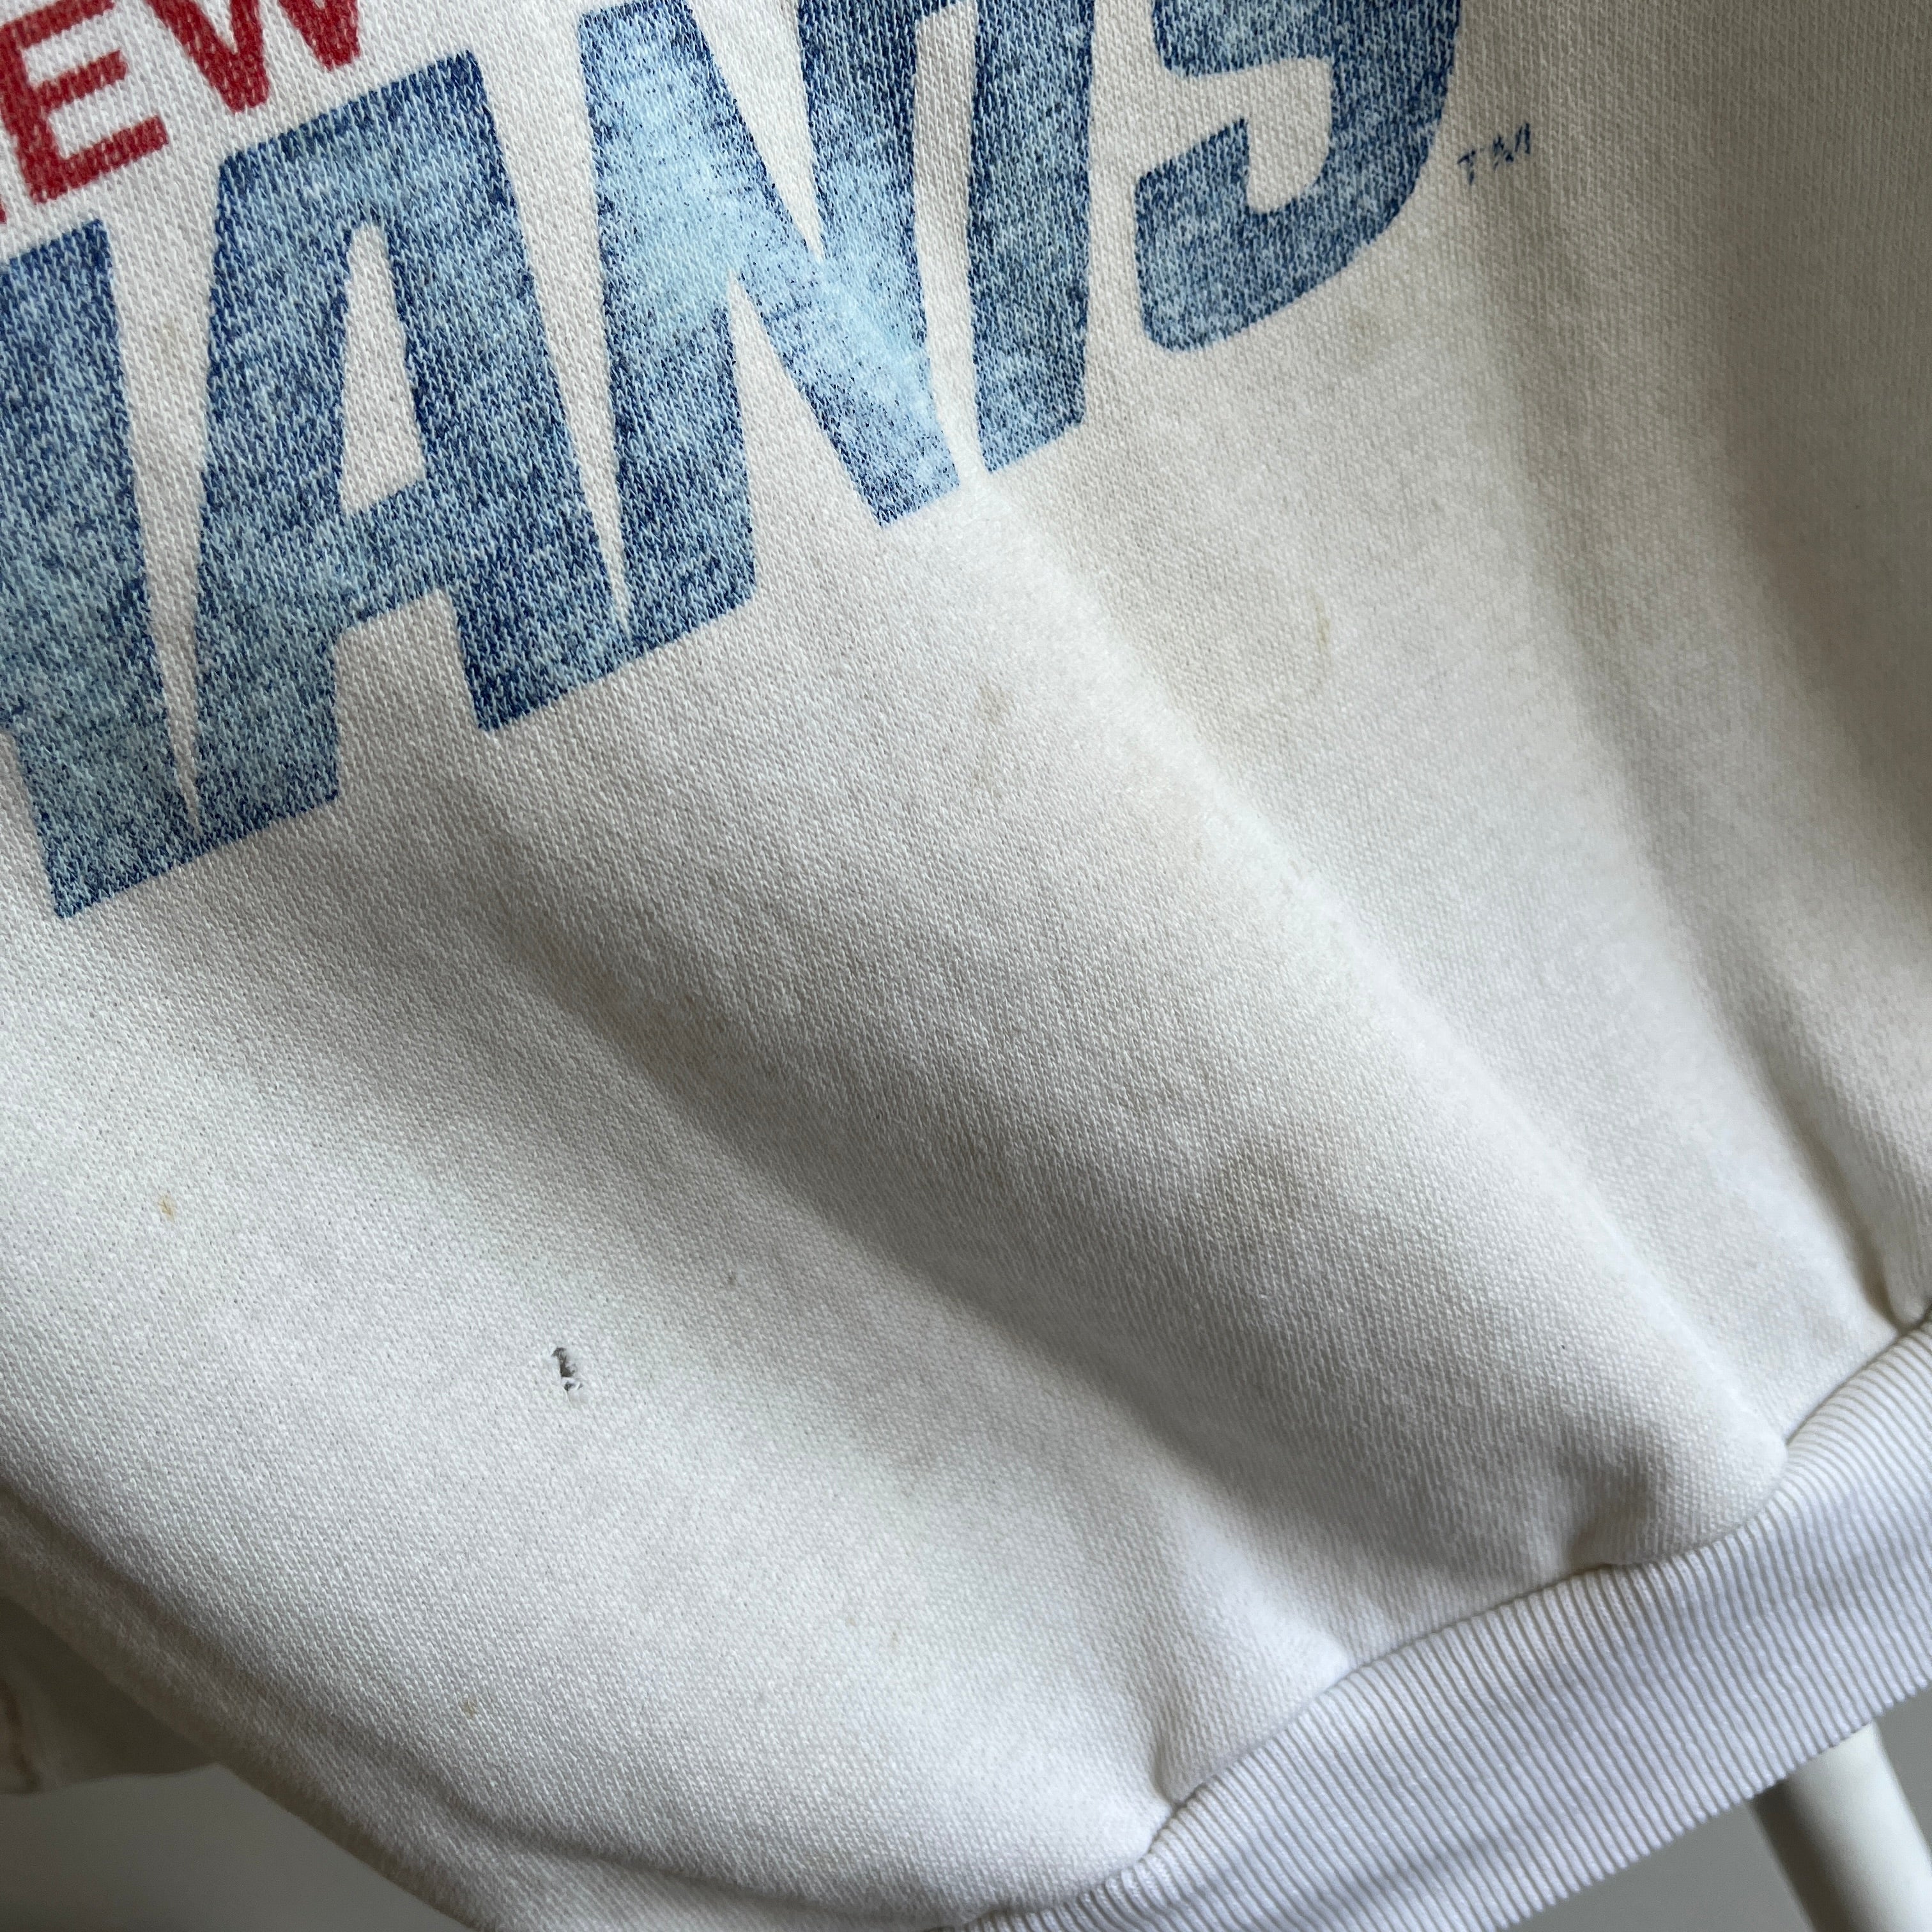 1986 New York Giants CHAMPIONS Sweatshirt by Trench